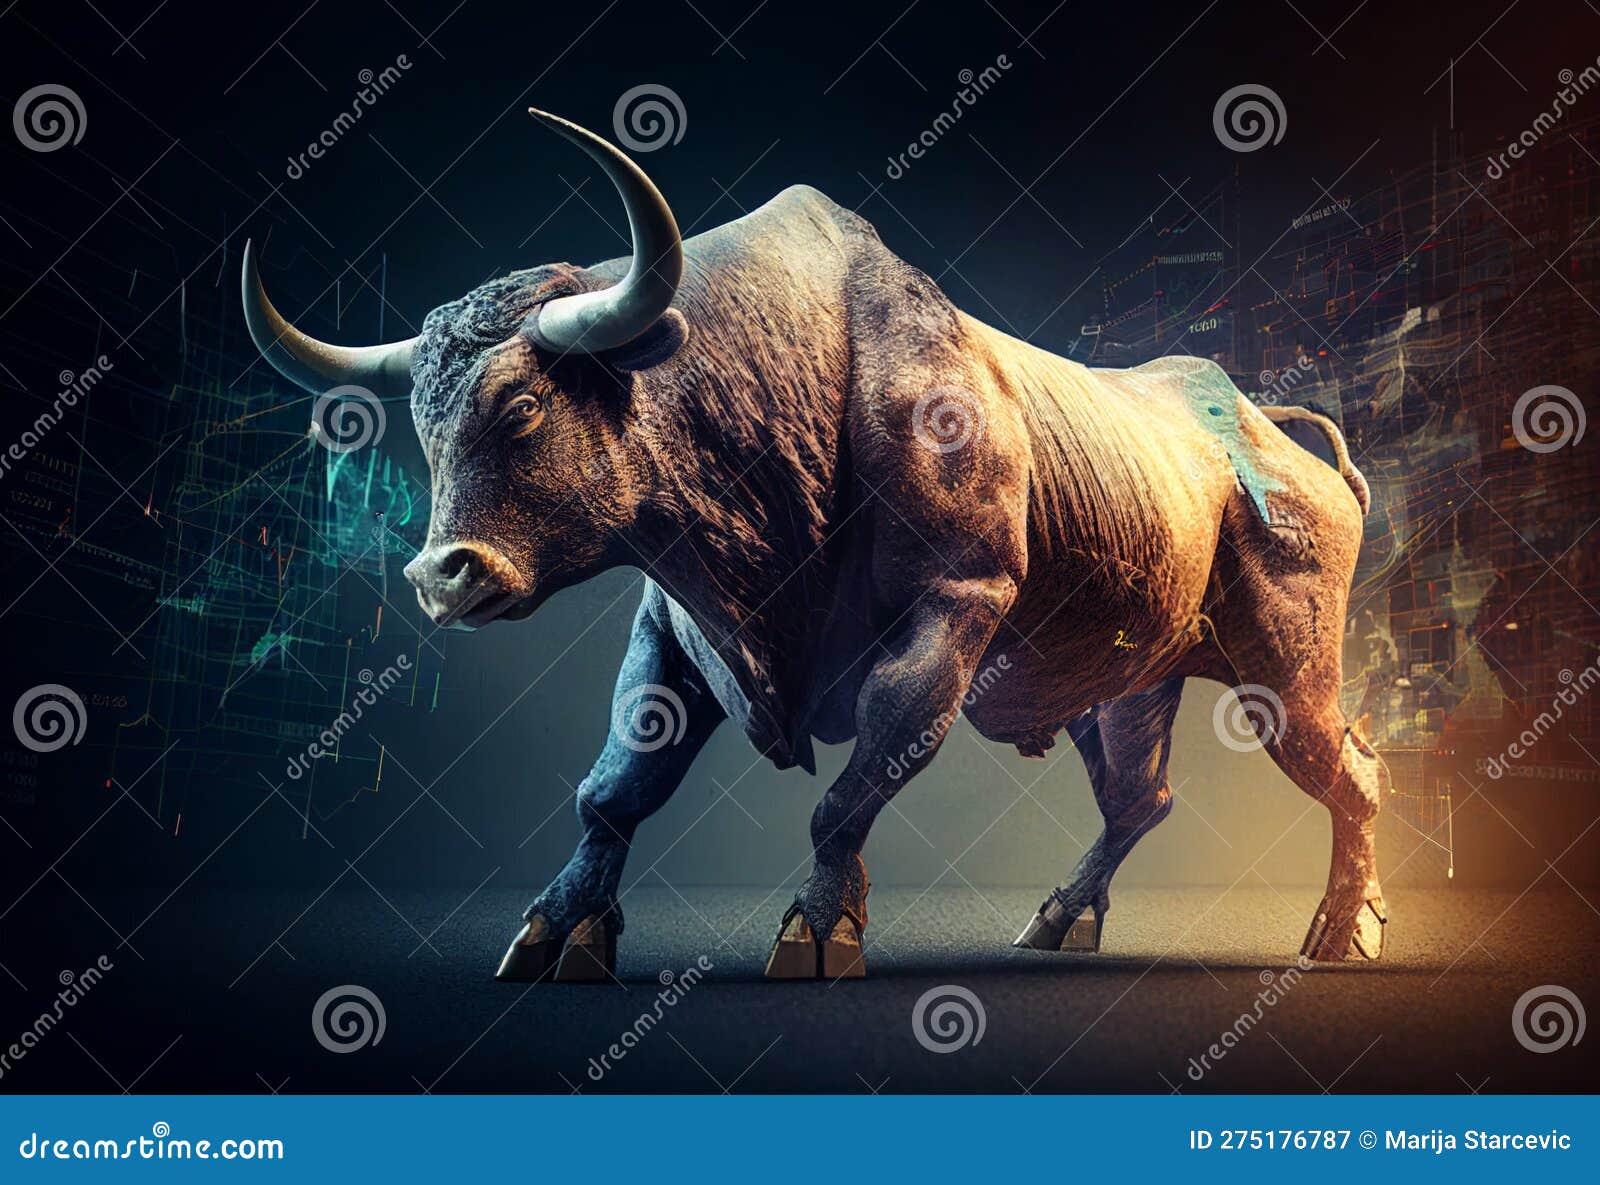 wallstreet bull, bullish stock market sentiment concept. finances and wealth growth